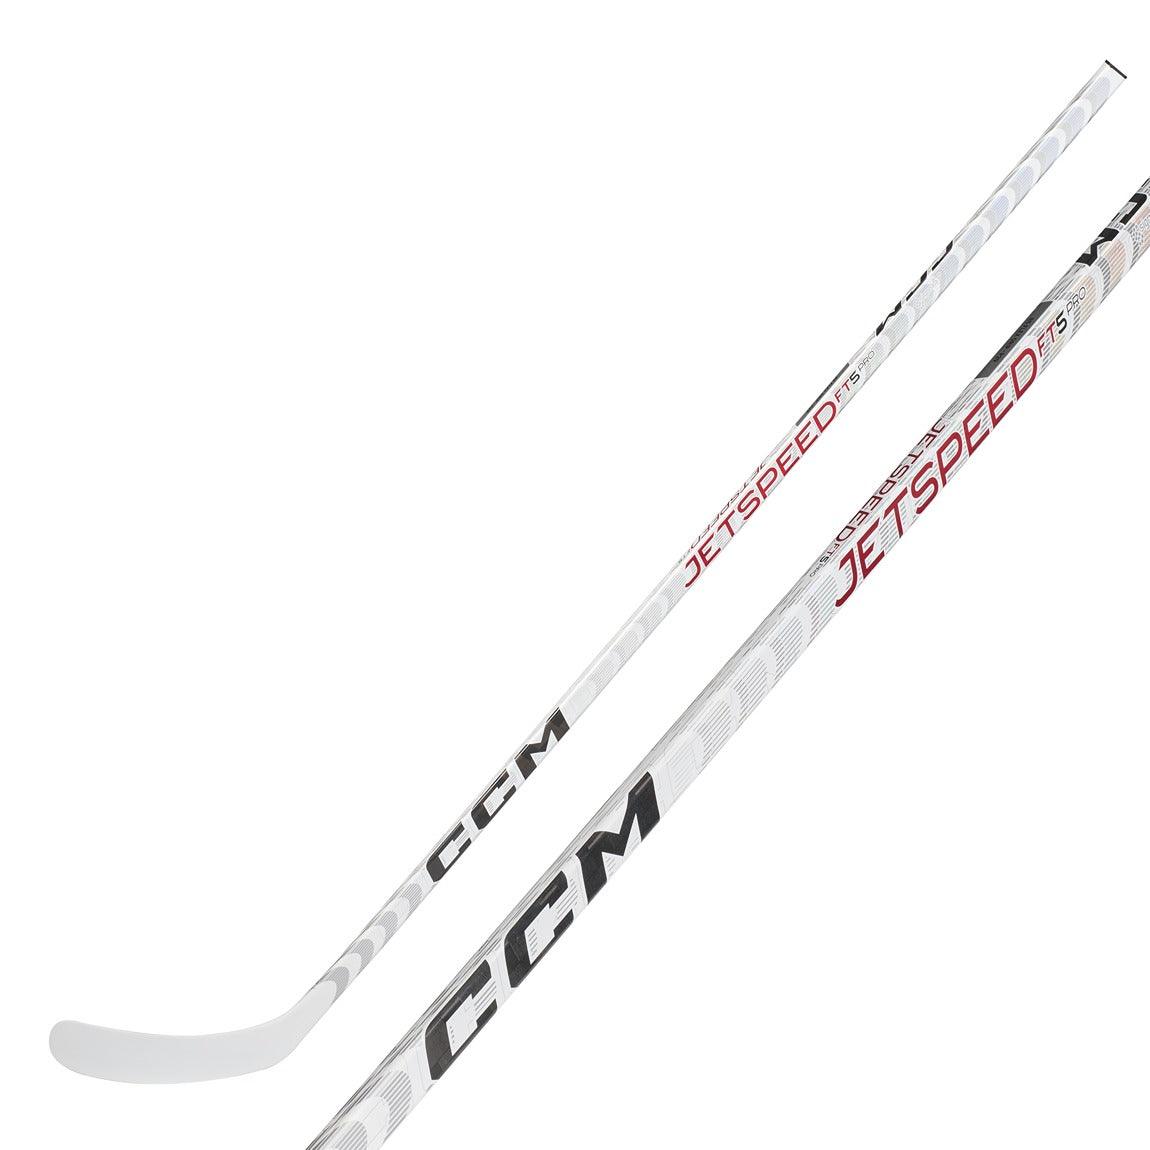 Jetspeed FT5 Pro Hockey Stick (North Edition) - Senior - Sports Excellence